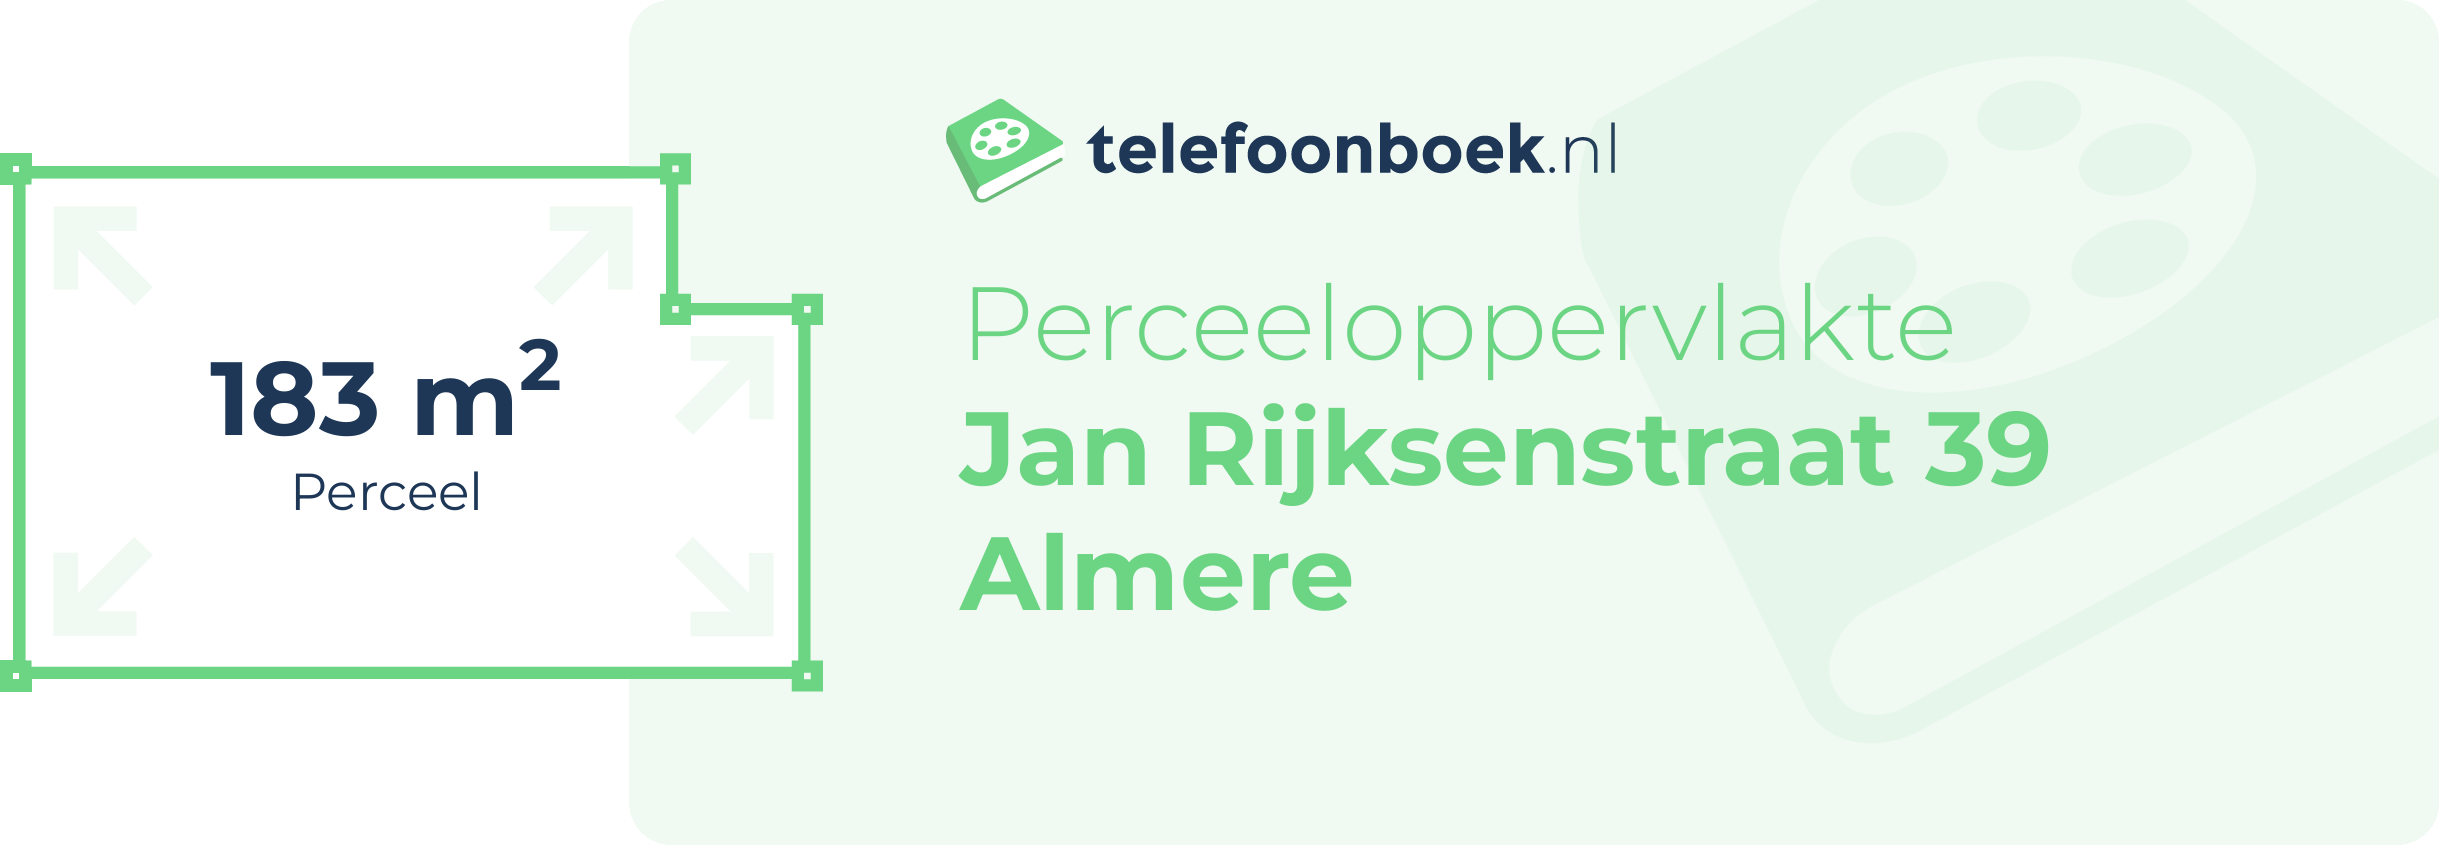 Perceeloppervlakte Jan Rijksenstraat 39 Almere